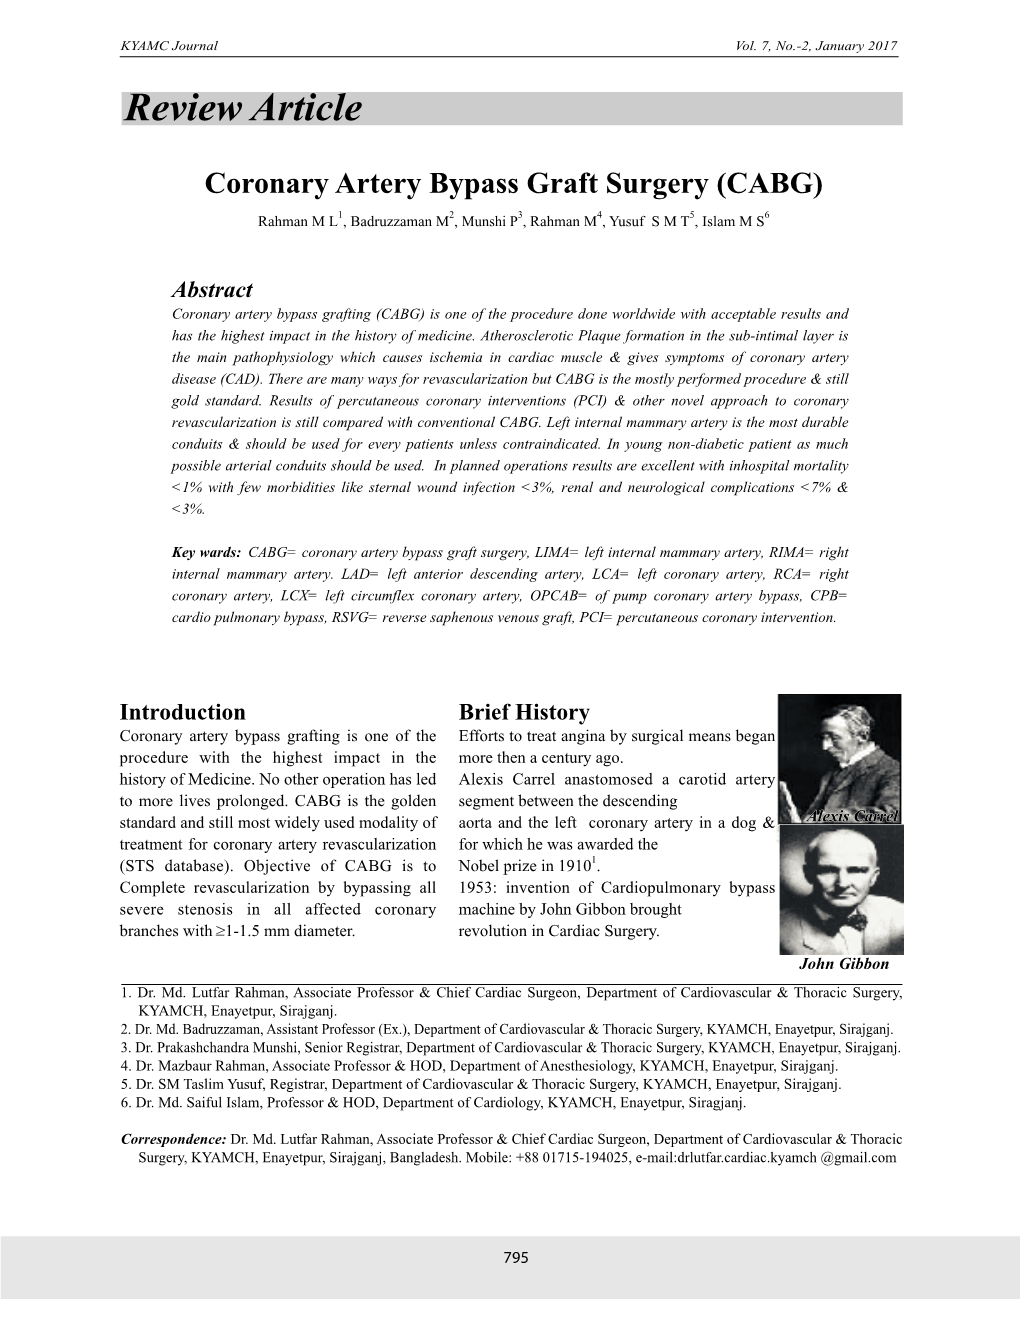 Review Article Coronary Artery Bypass Graft Surgery